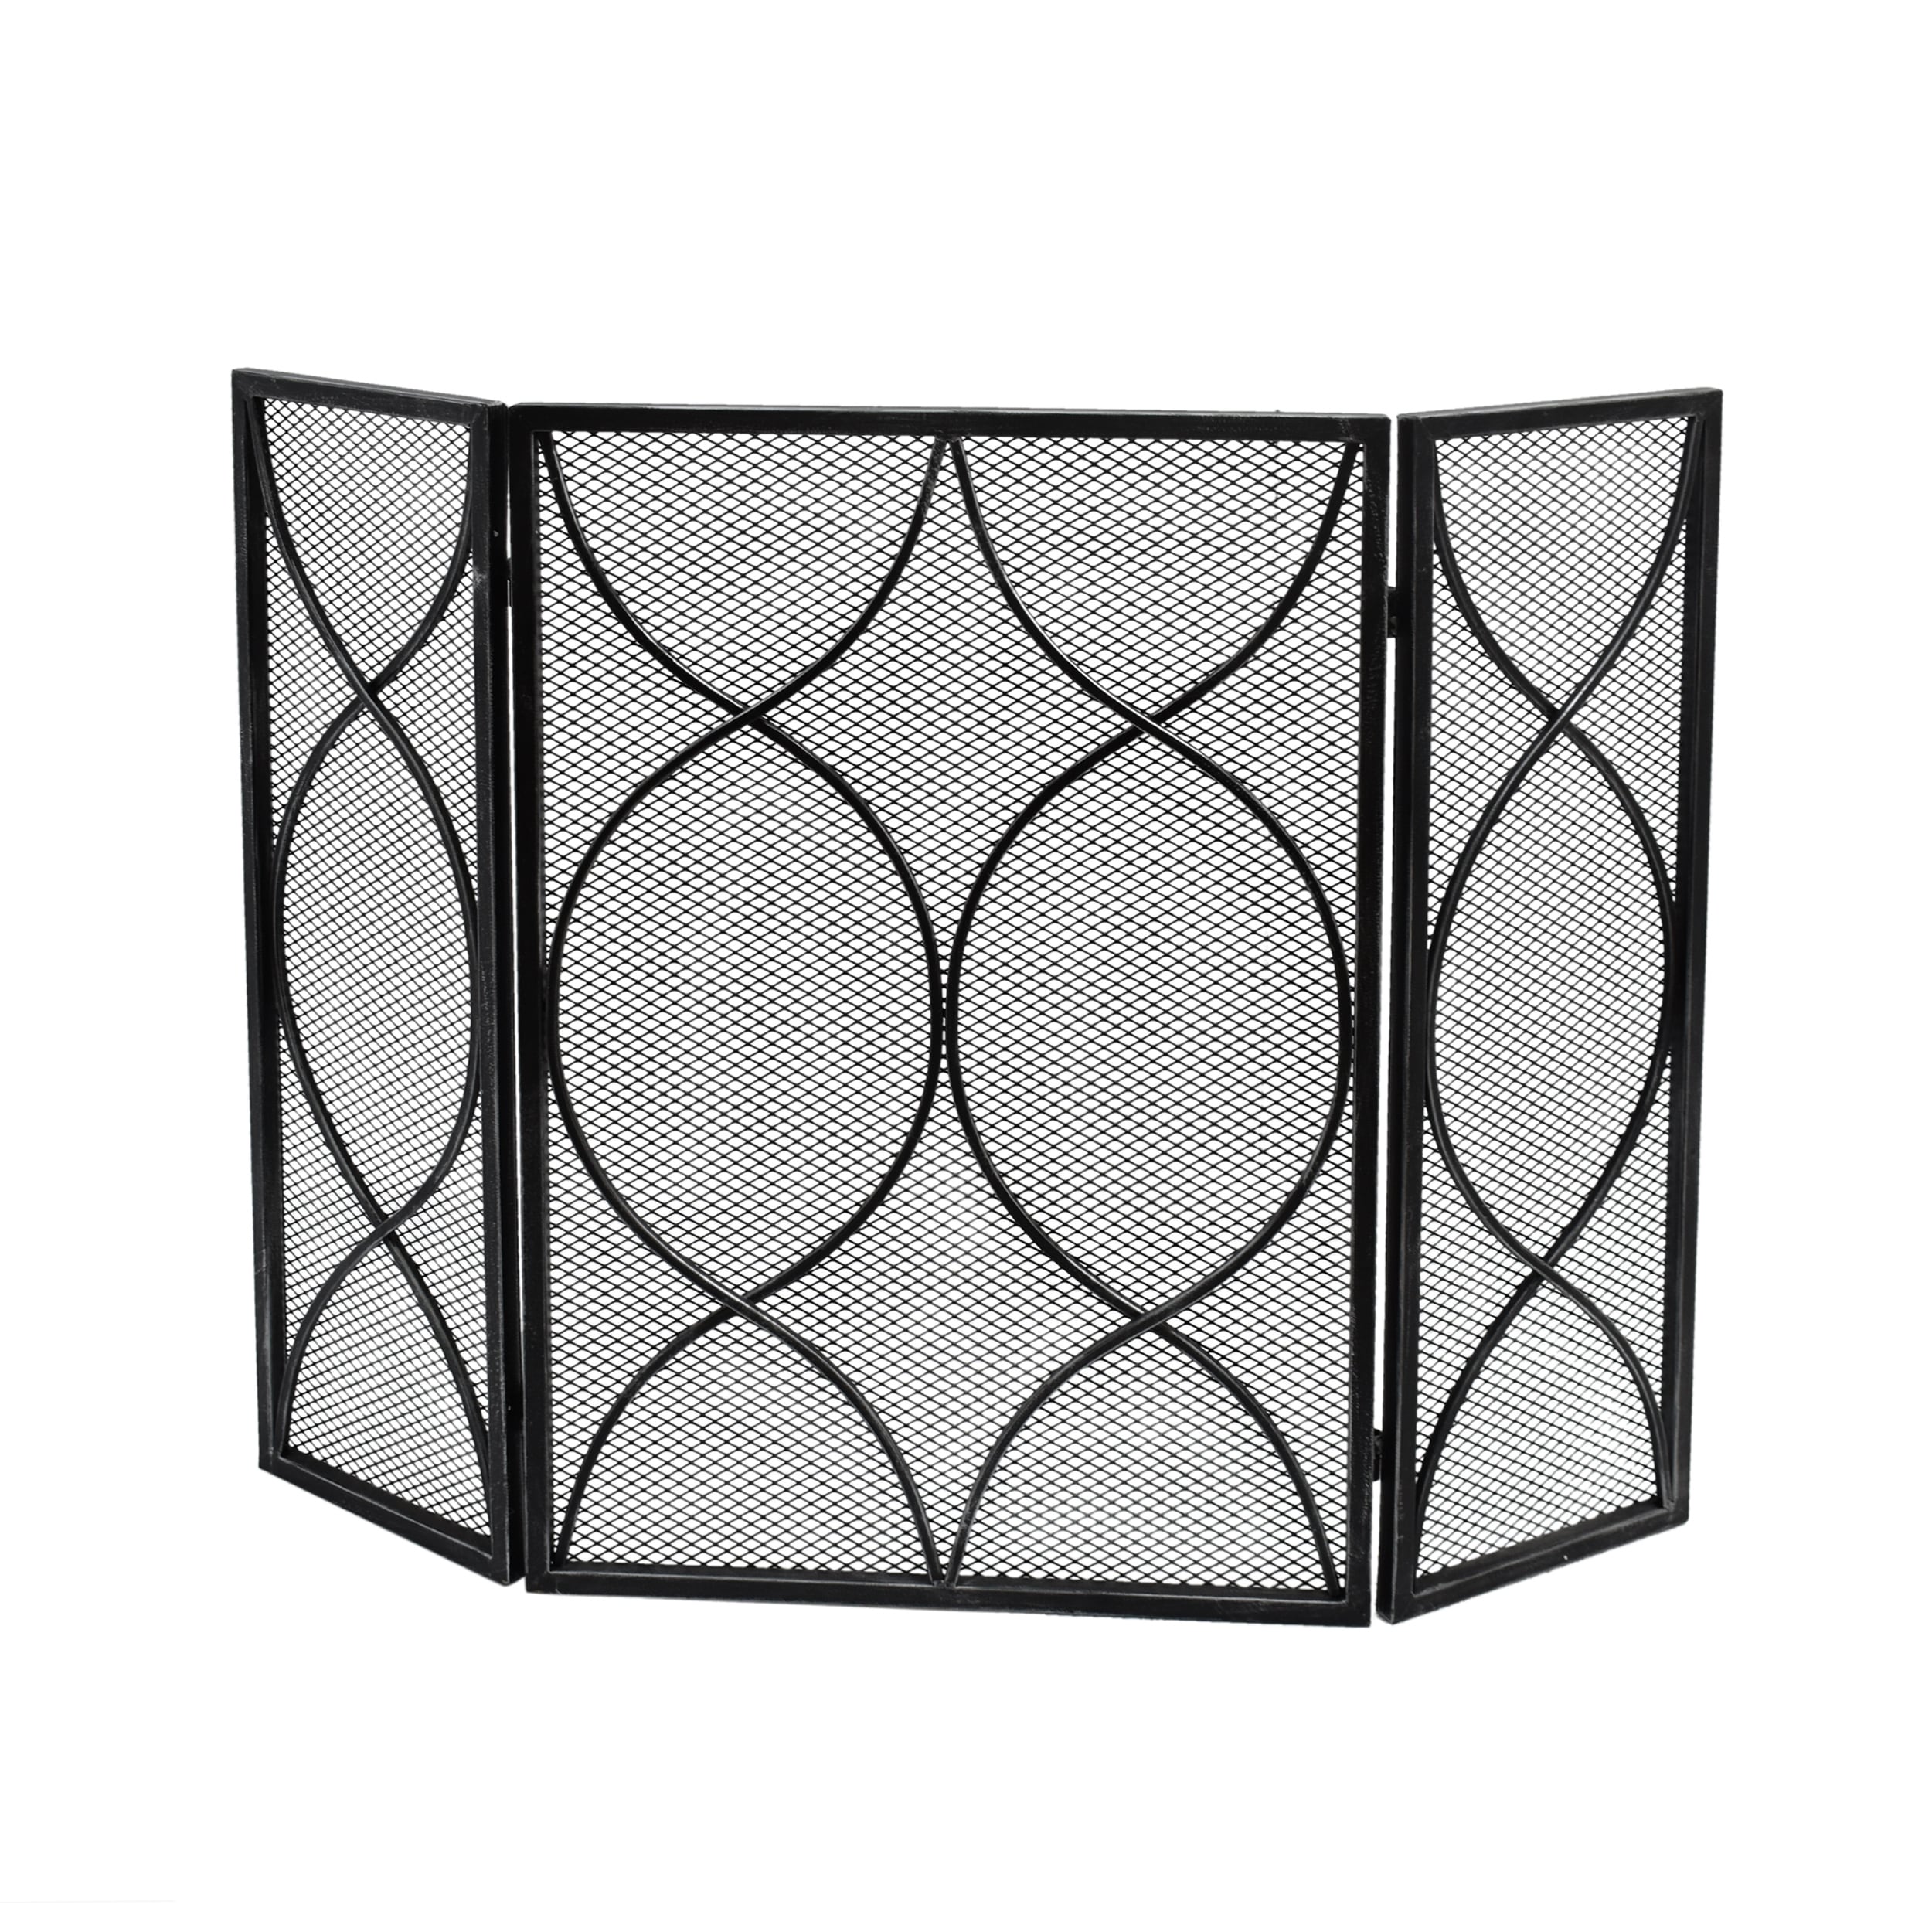 Pleasants Modern Three Panel Iron Firescreen, Black Silver Finish | - Best Selling Home Decor 309136